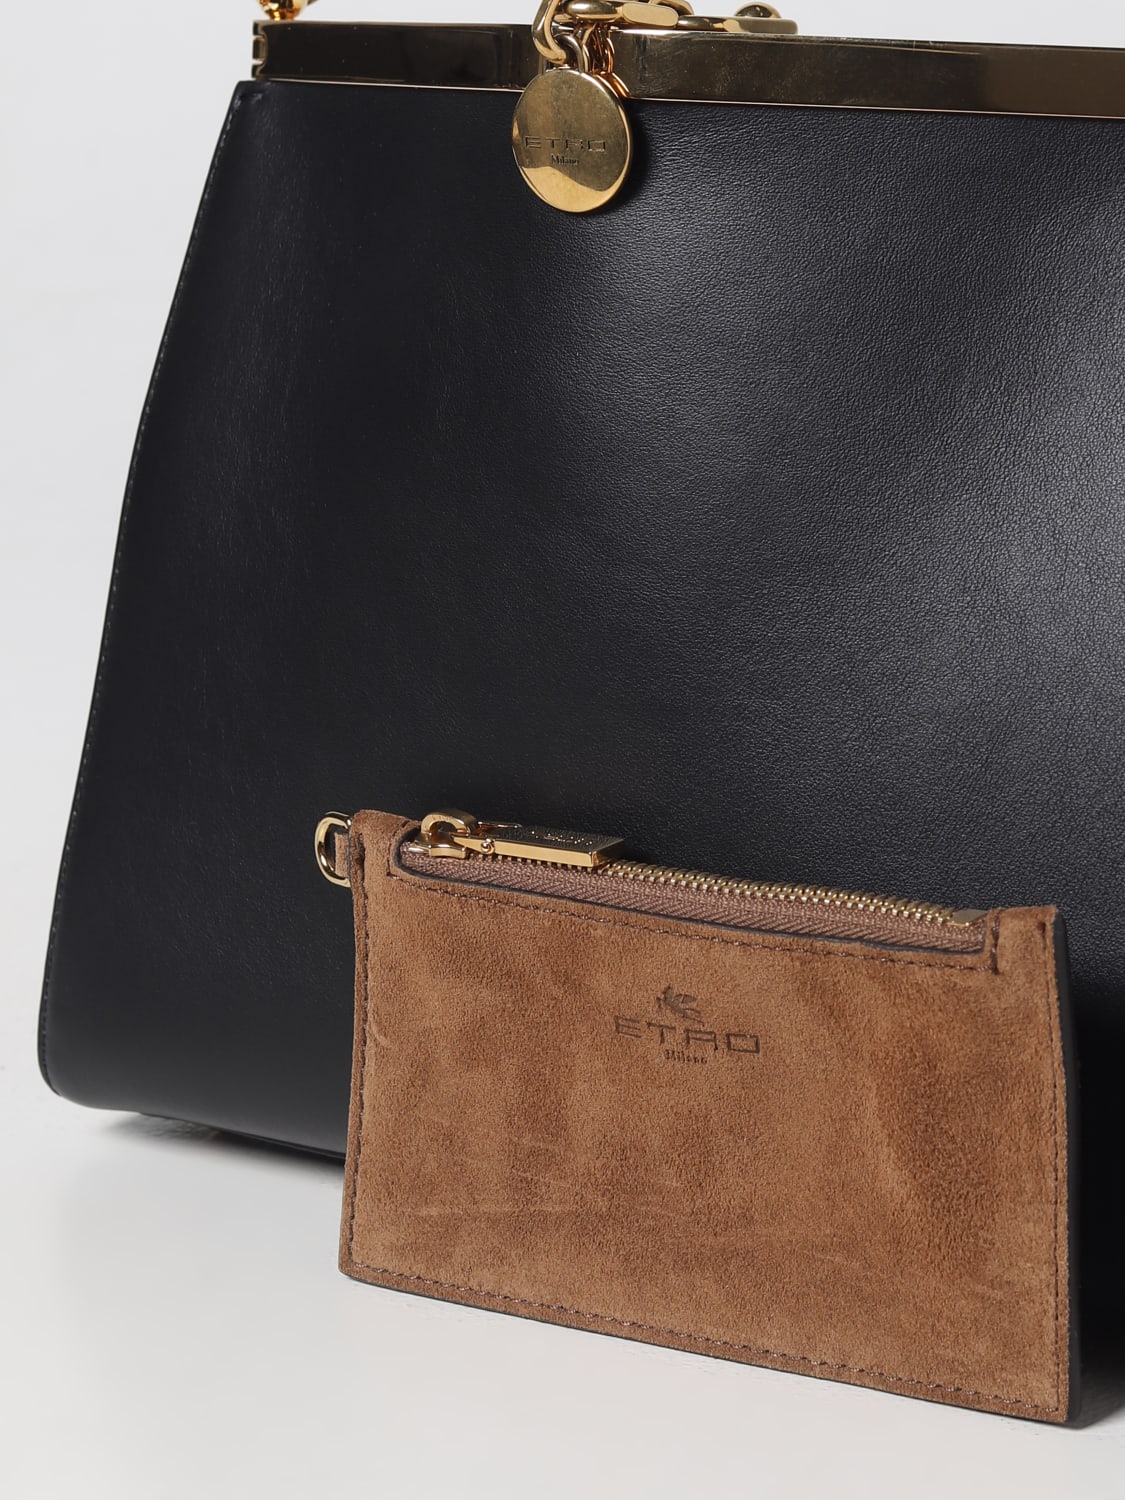 ETRO Vela small leather shoulder bag